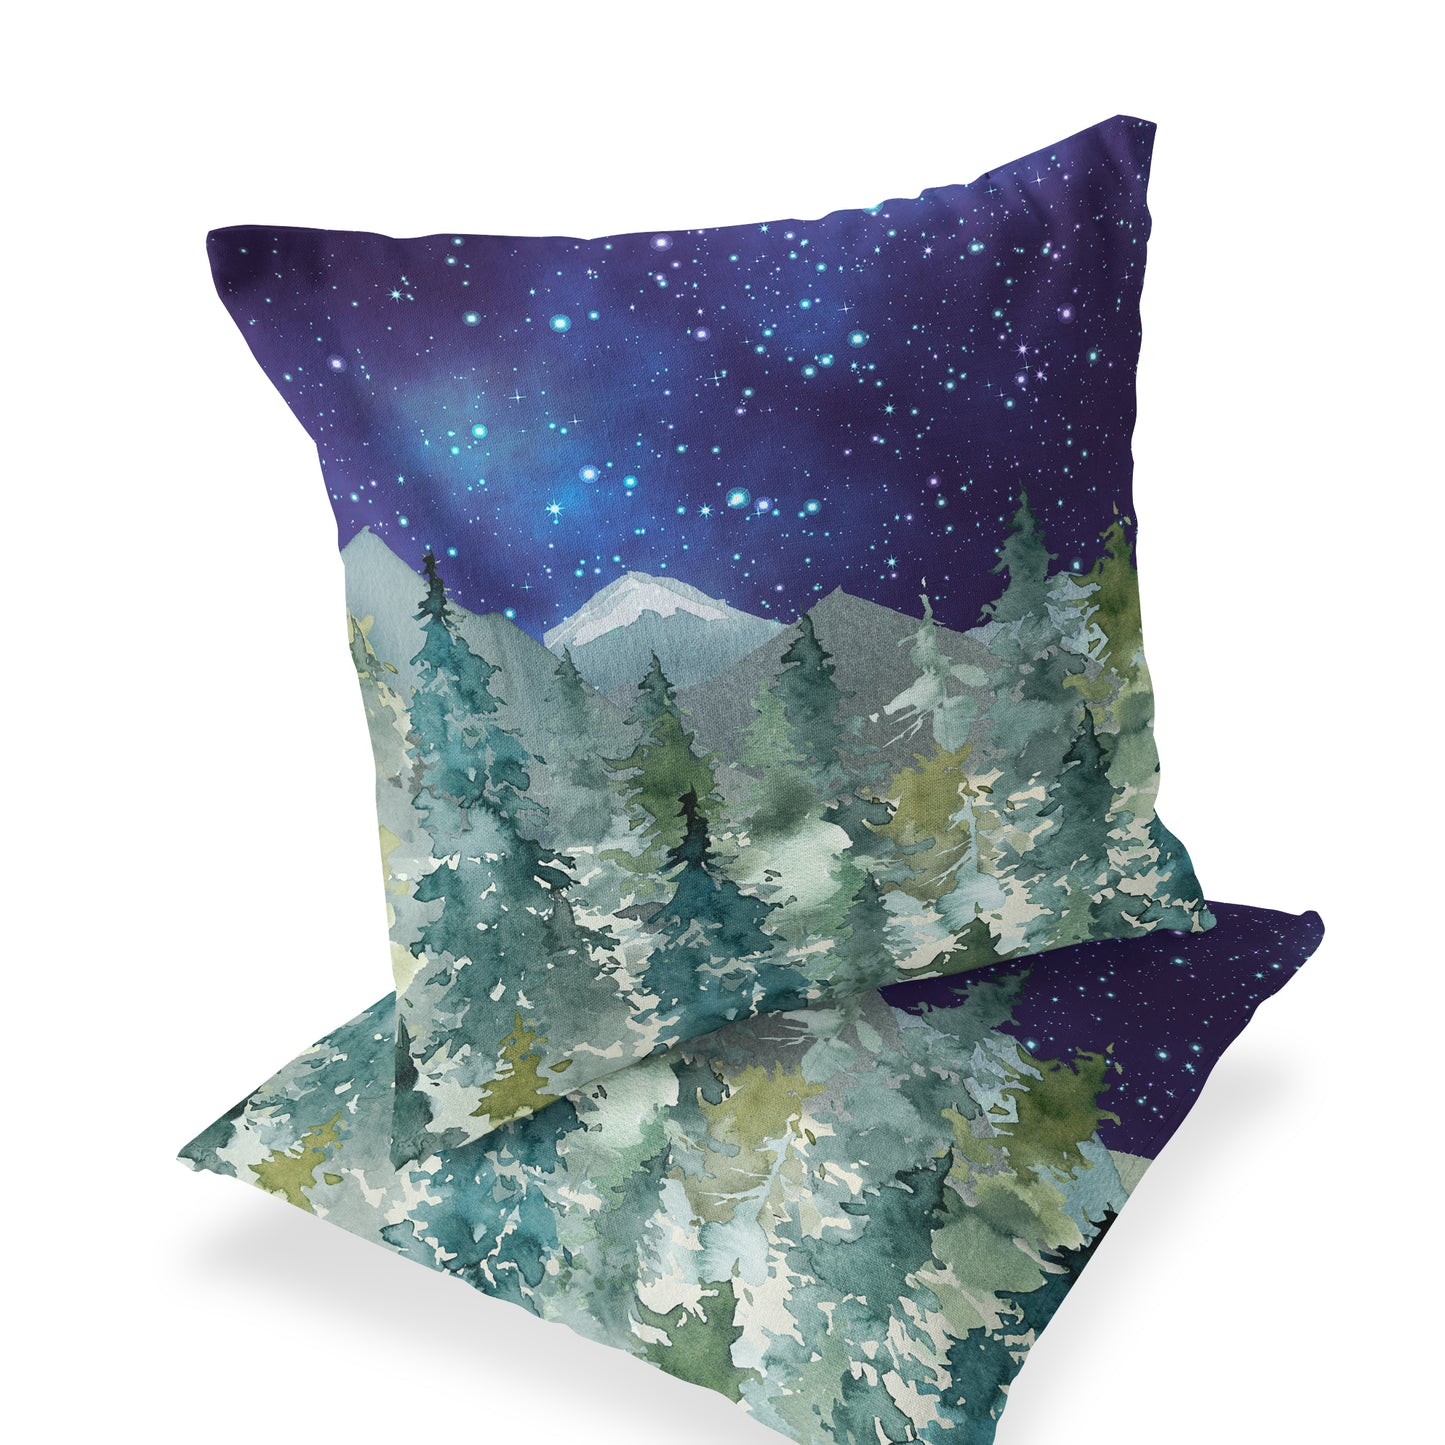 Dark Blue Sky Forest Pillow, Woodland Nursery Decor - Majestic Forest